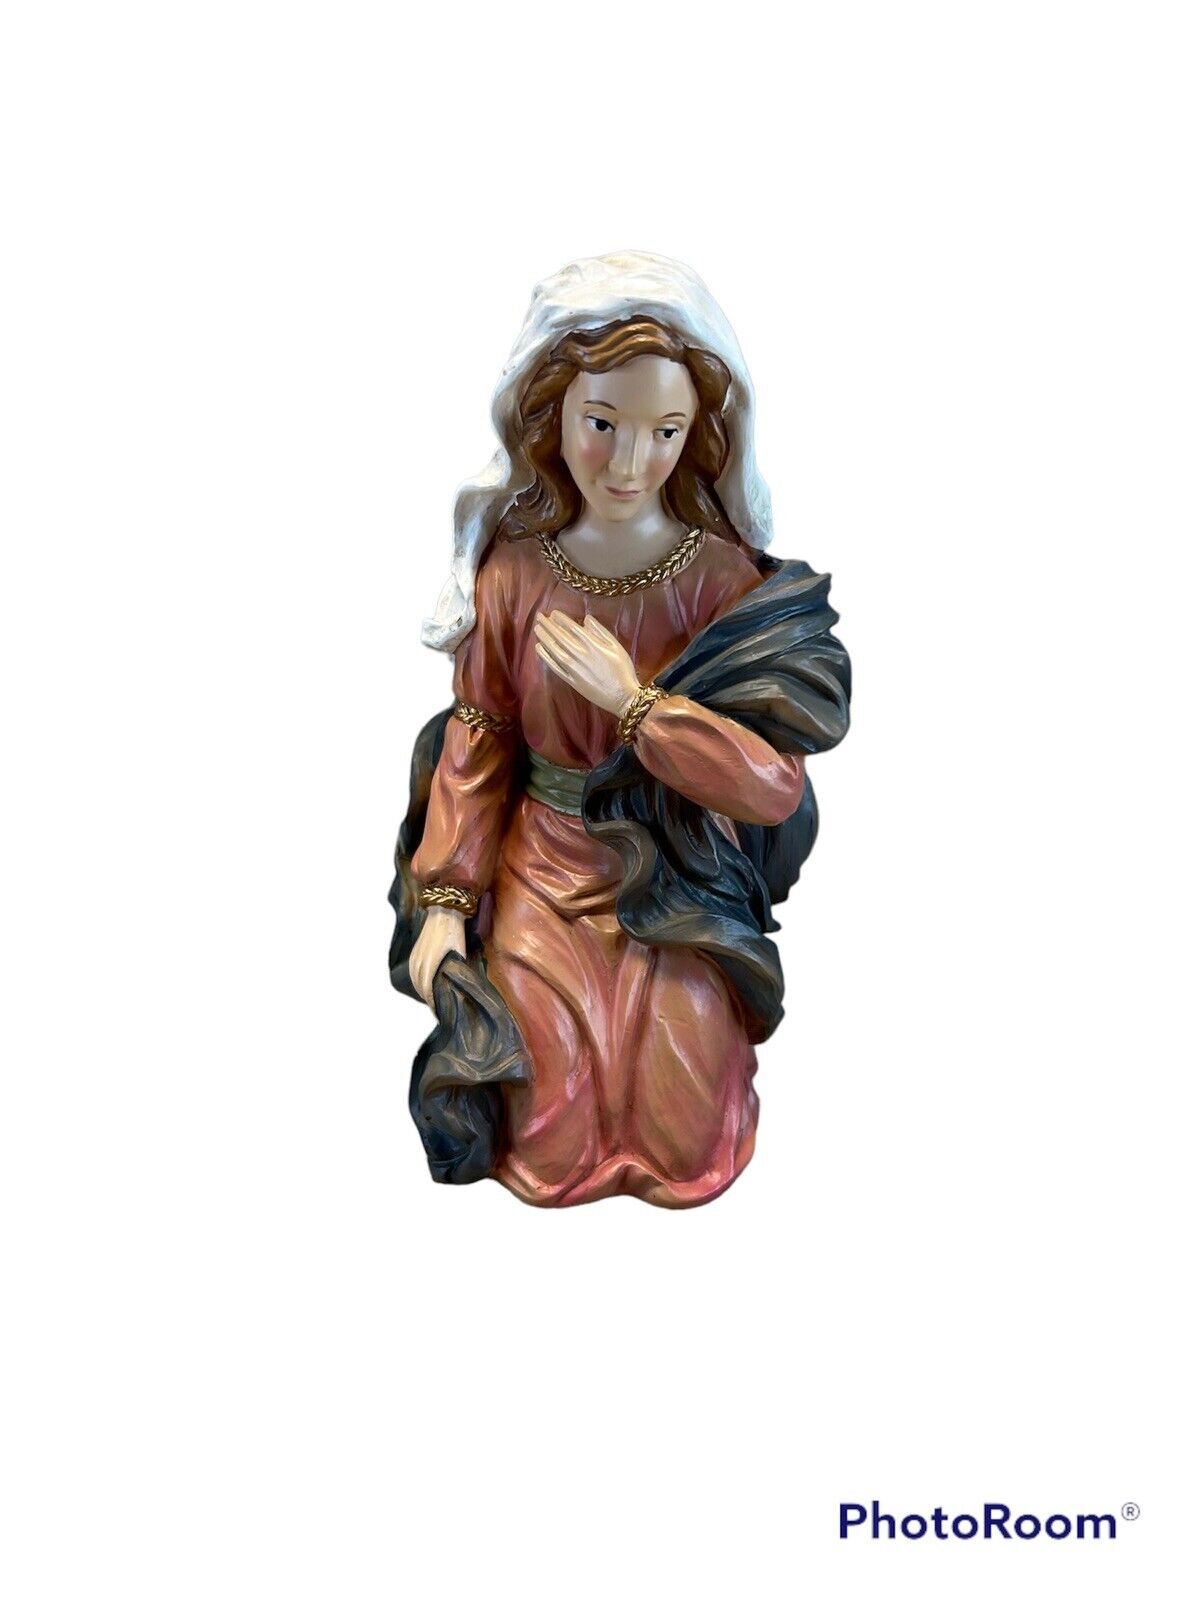 Mary 7” Replacement Figure for Kirkland Signature  Nativity Set #739800 Manger